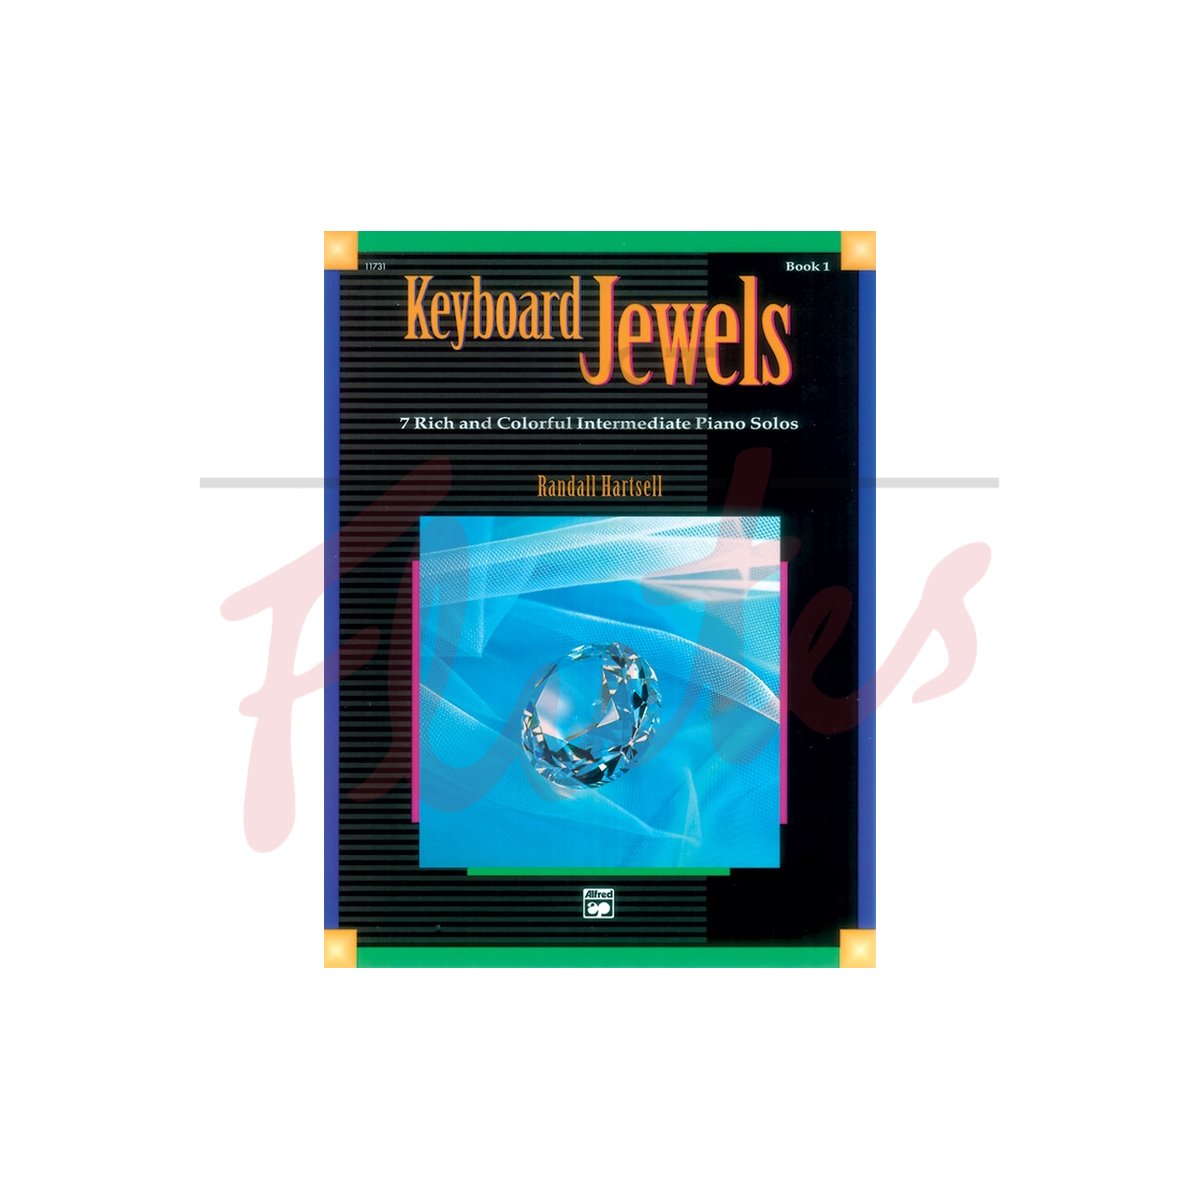 Keyboard Jewels Book 1